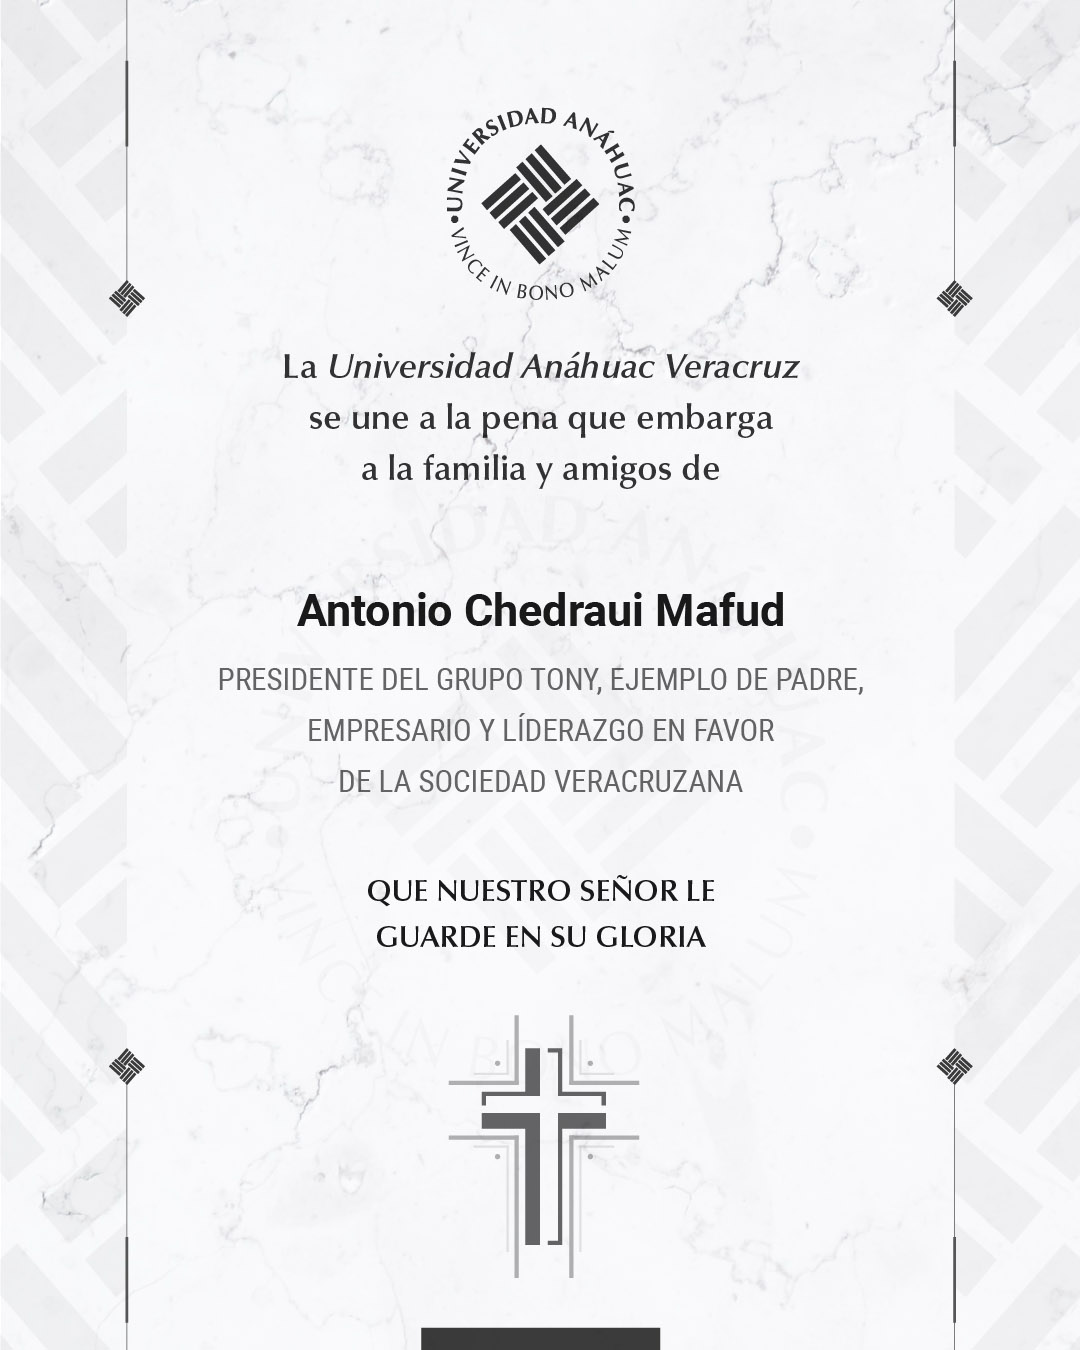 10 / 10 - Antonio Chedraui Mafud